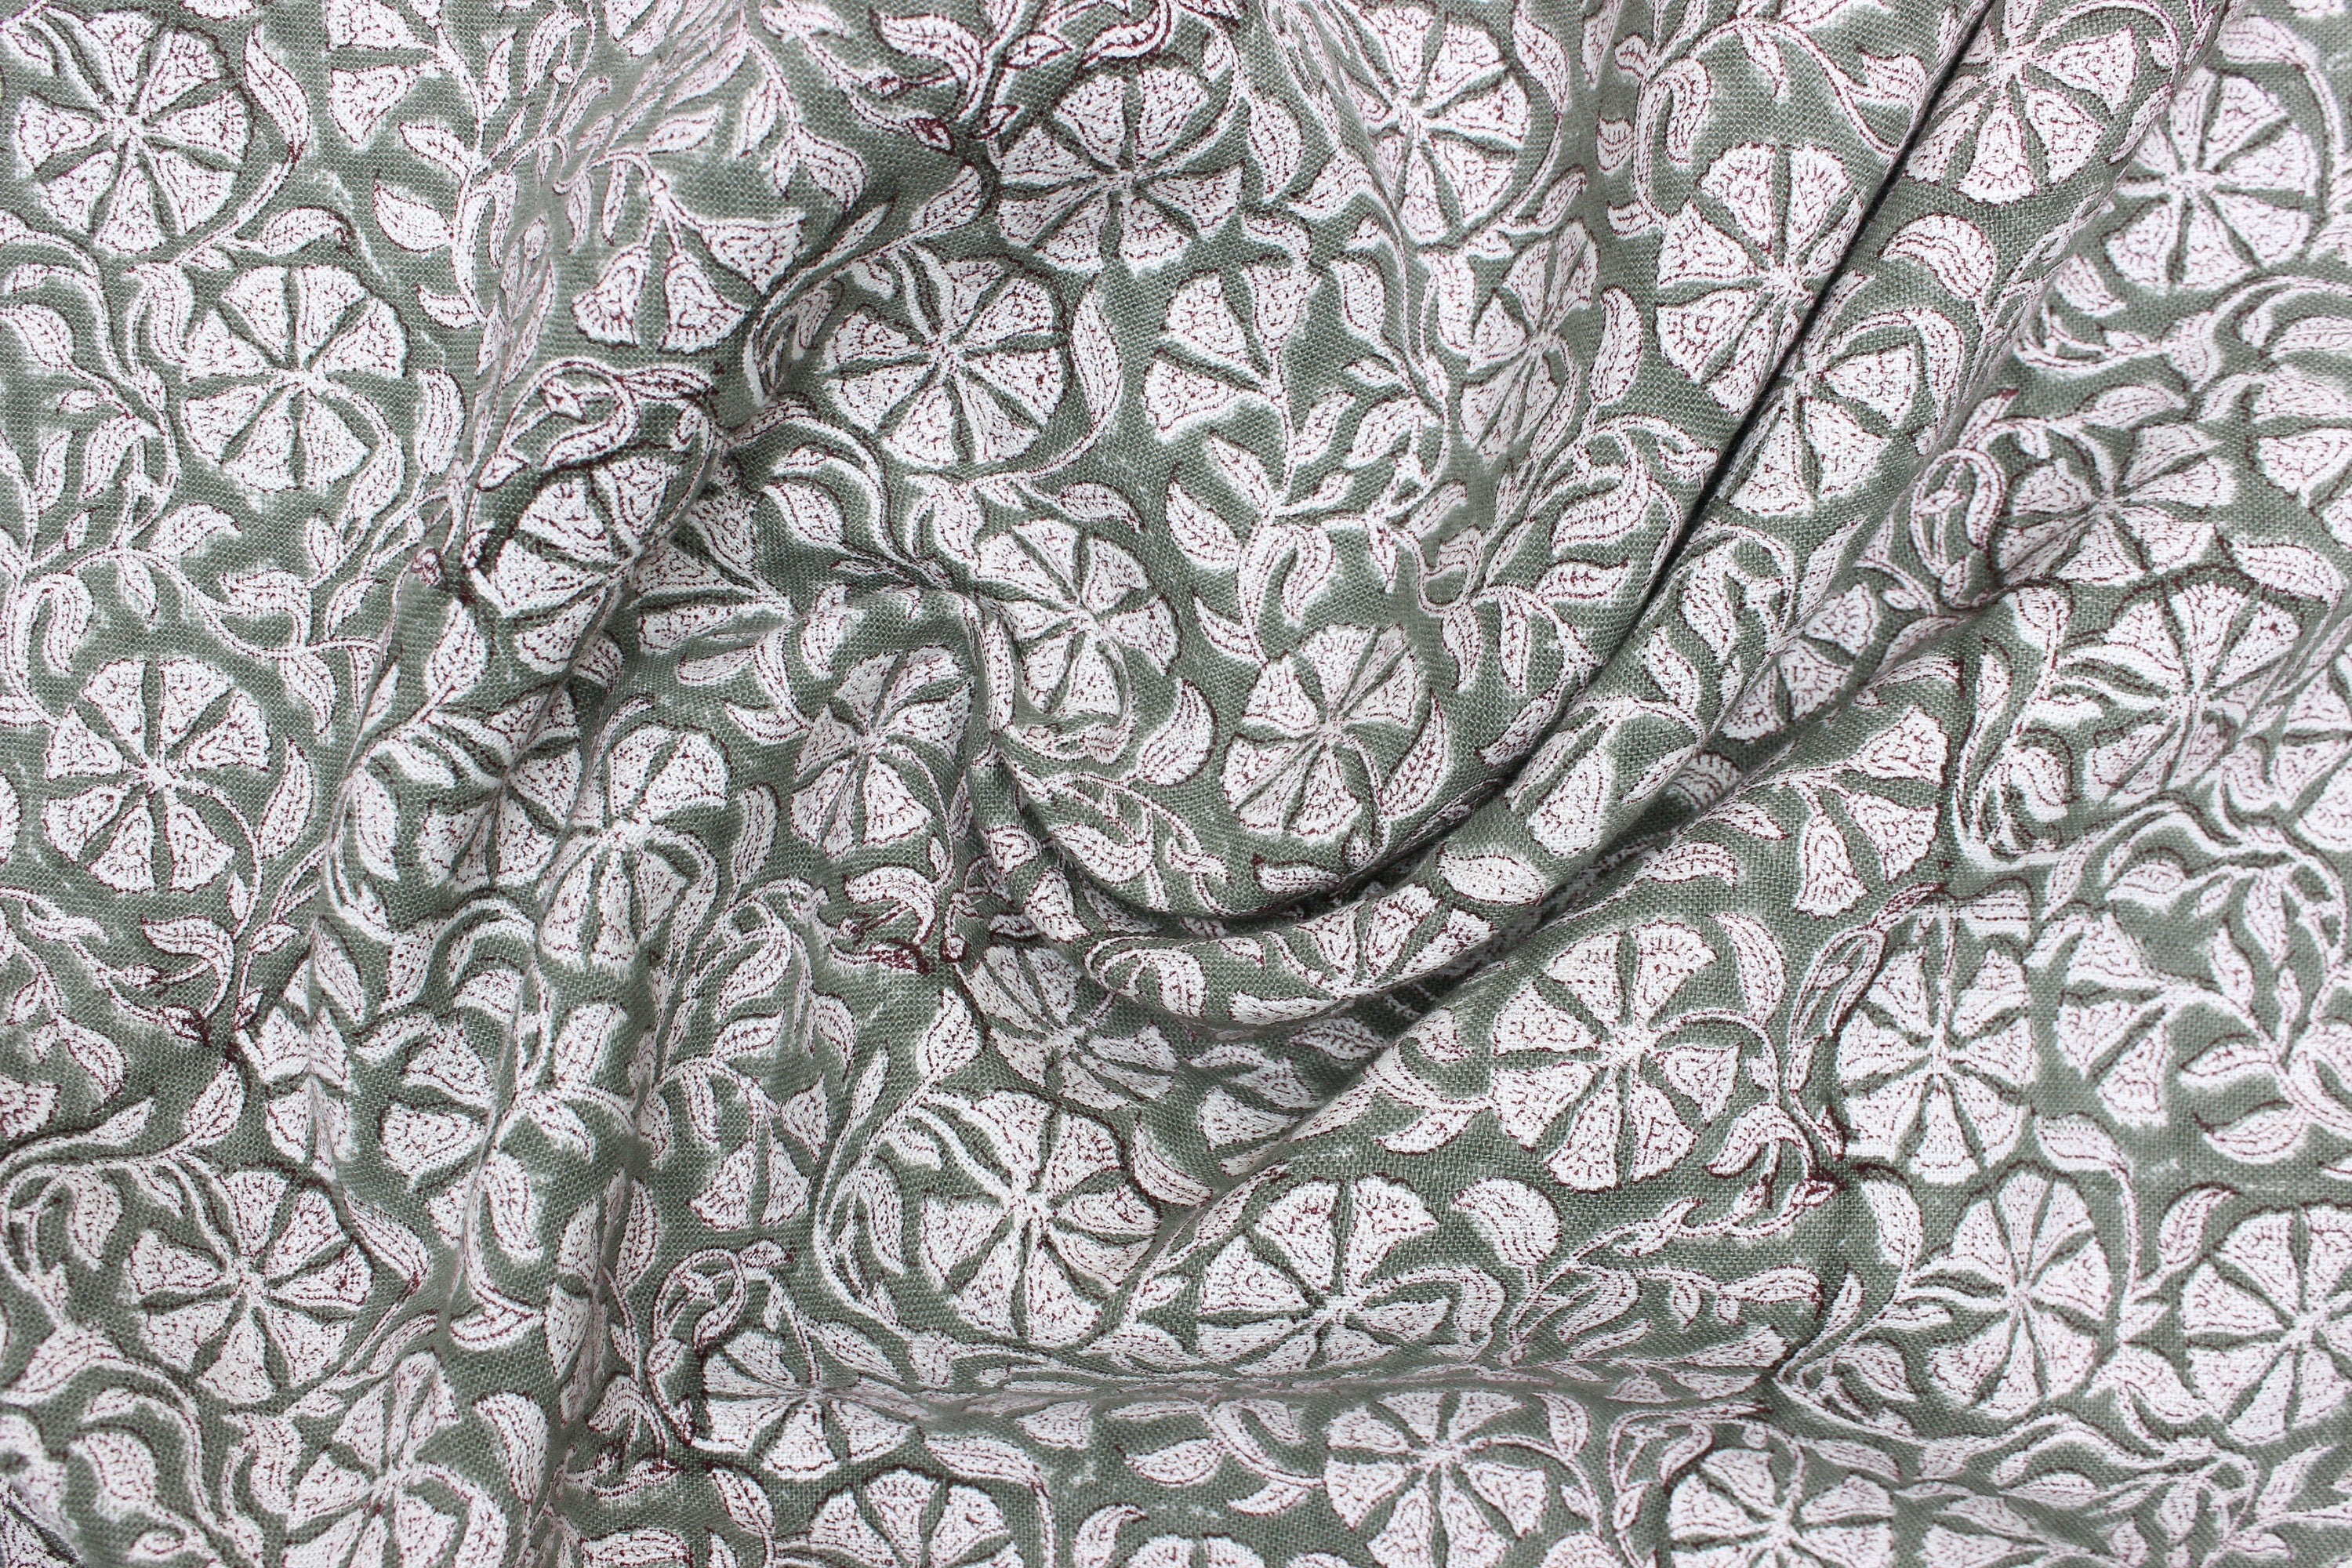 Block Print Linen Fabric, Rudraksha  Block Print Linen Fabric By The Yard, Floral Linen, Fabric From India, Linen Upholstery Pillow Case Fabric